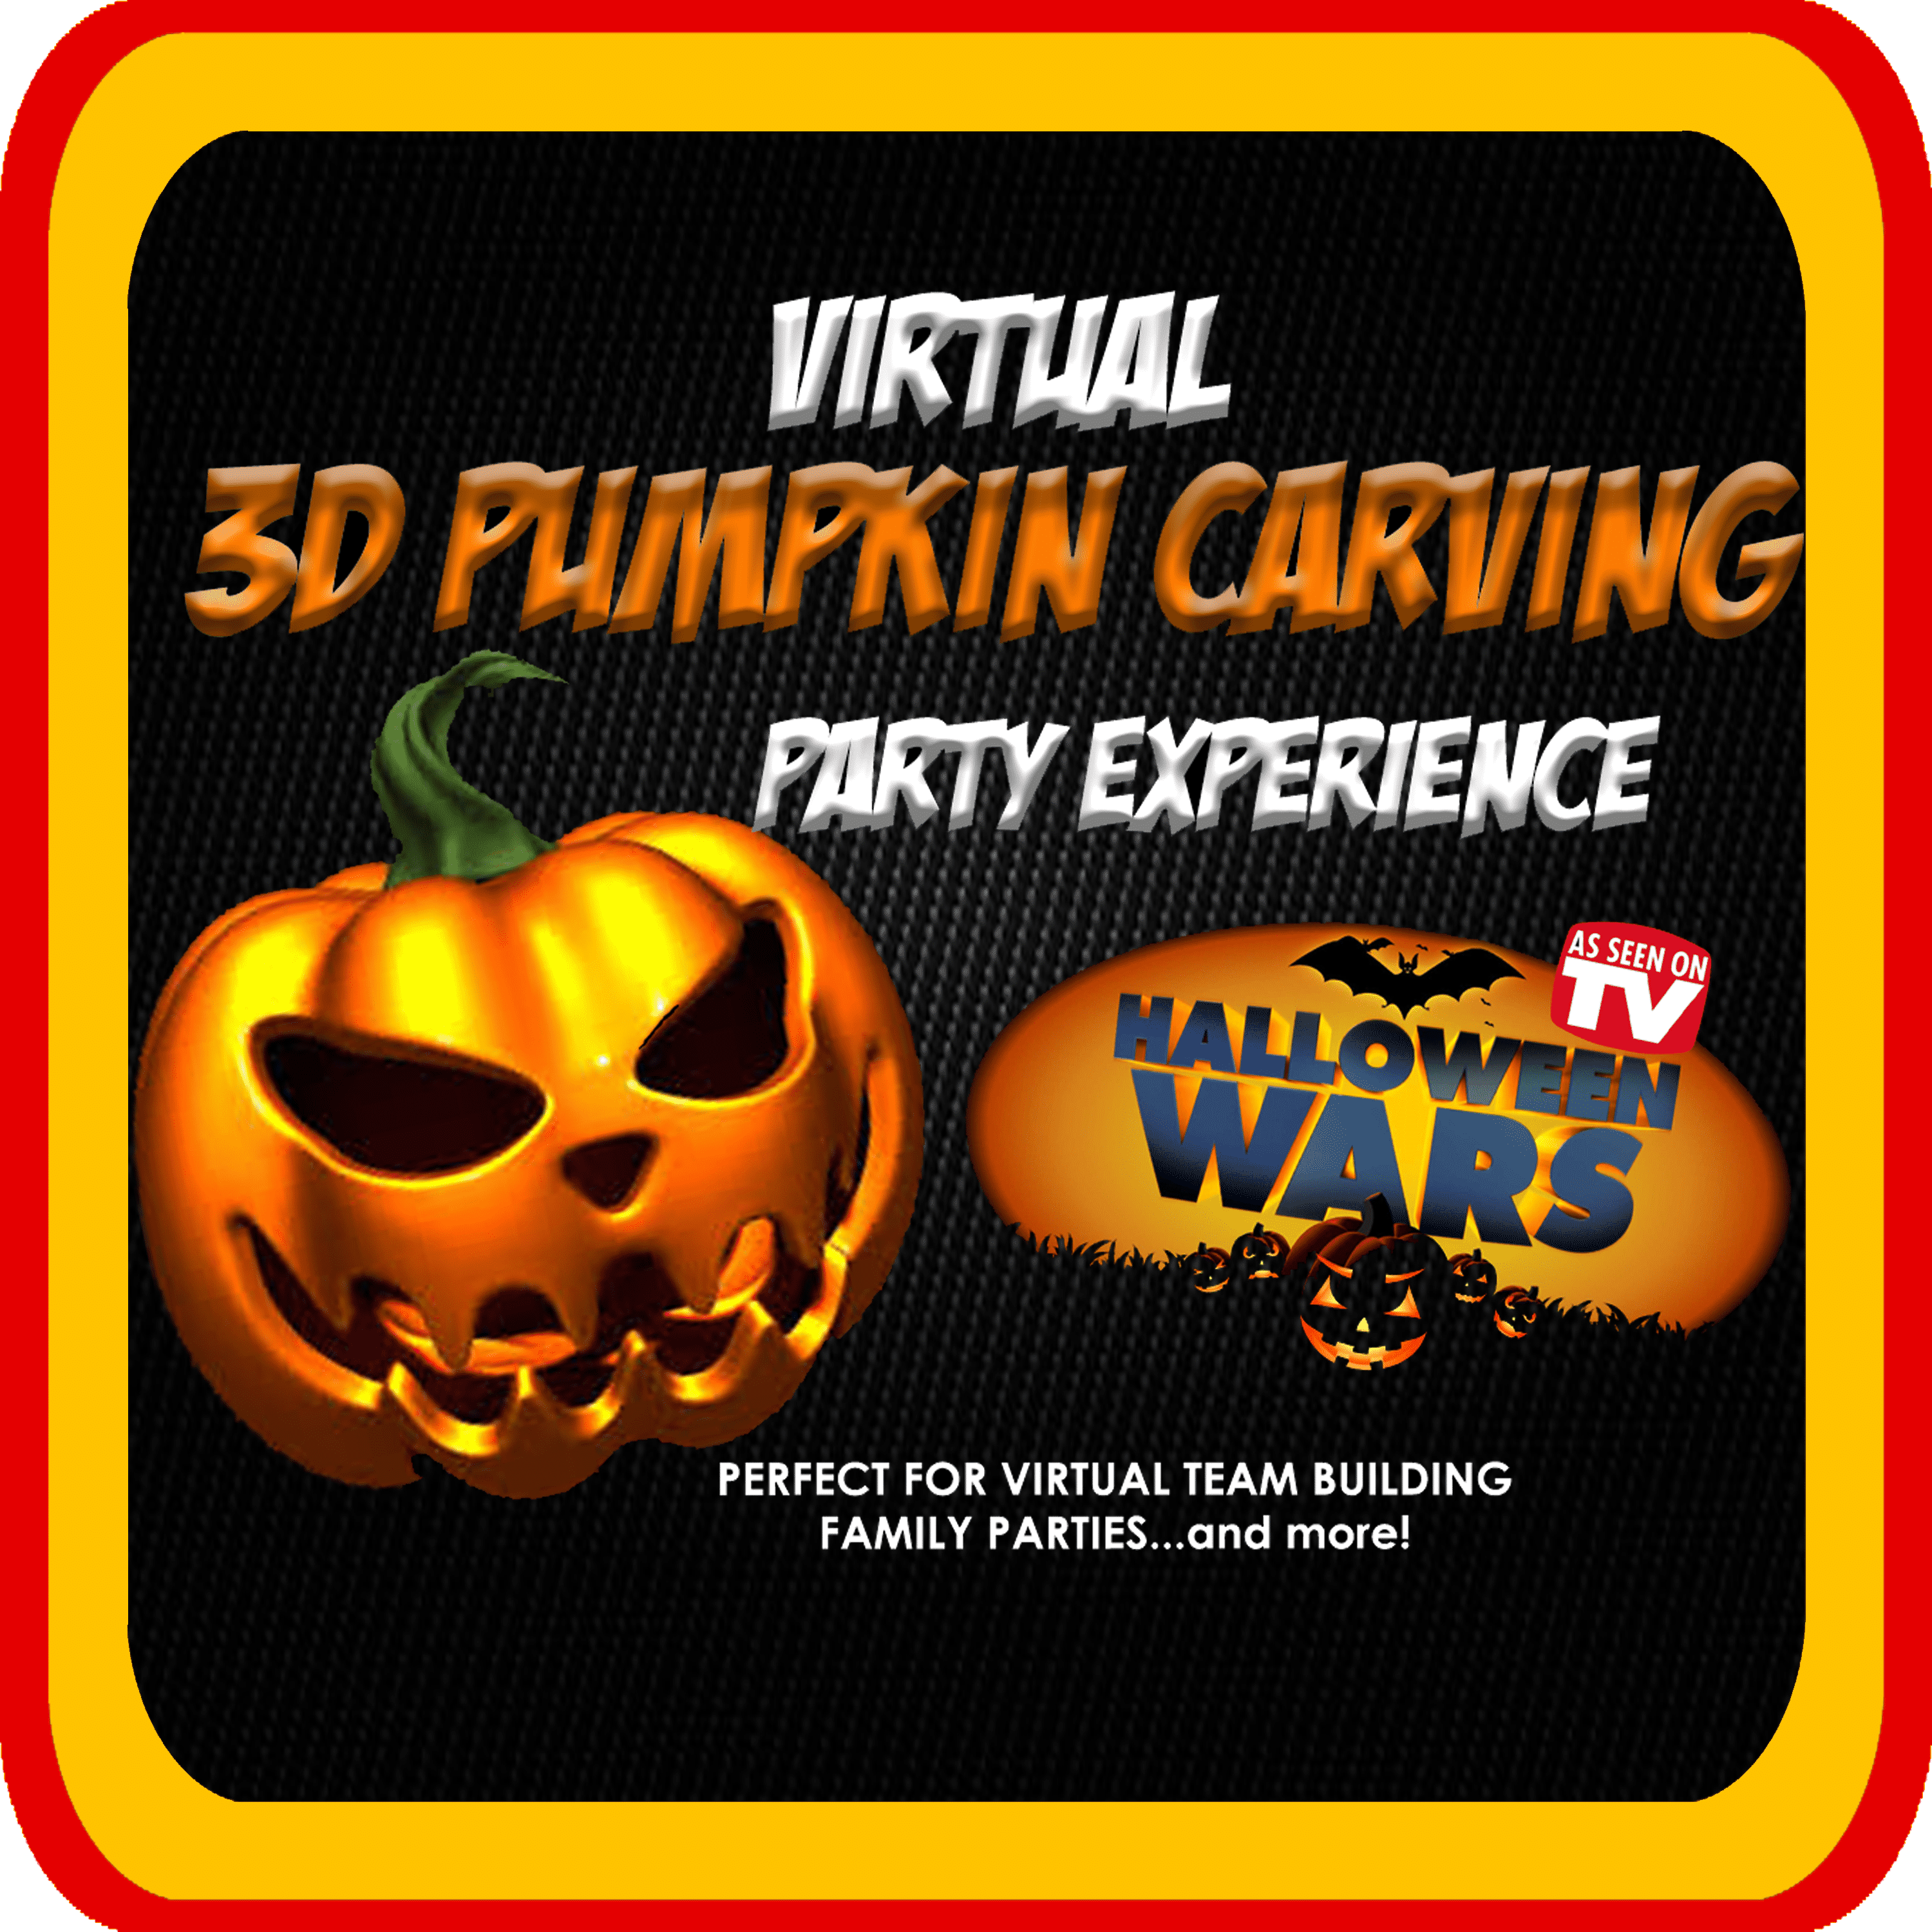 Virtual Pumpkin Carving, Zoom Pumpkin Carving, Halloween Wars, Virtual Halloween Wars, Virtual Carving, Big Head Cartoon, Halloween, Virtual Halloween, Zoom Halloween Party Ideas